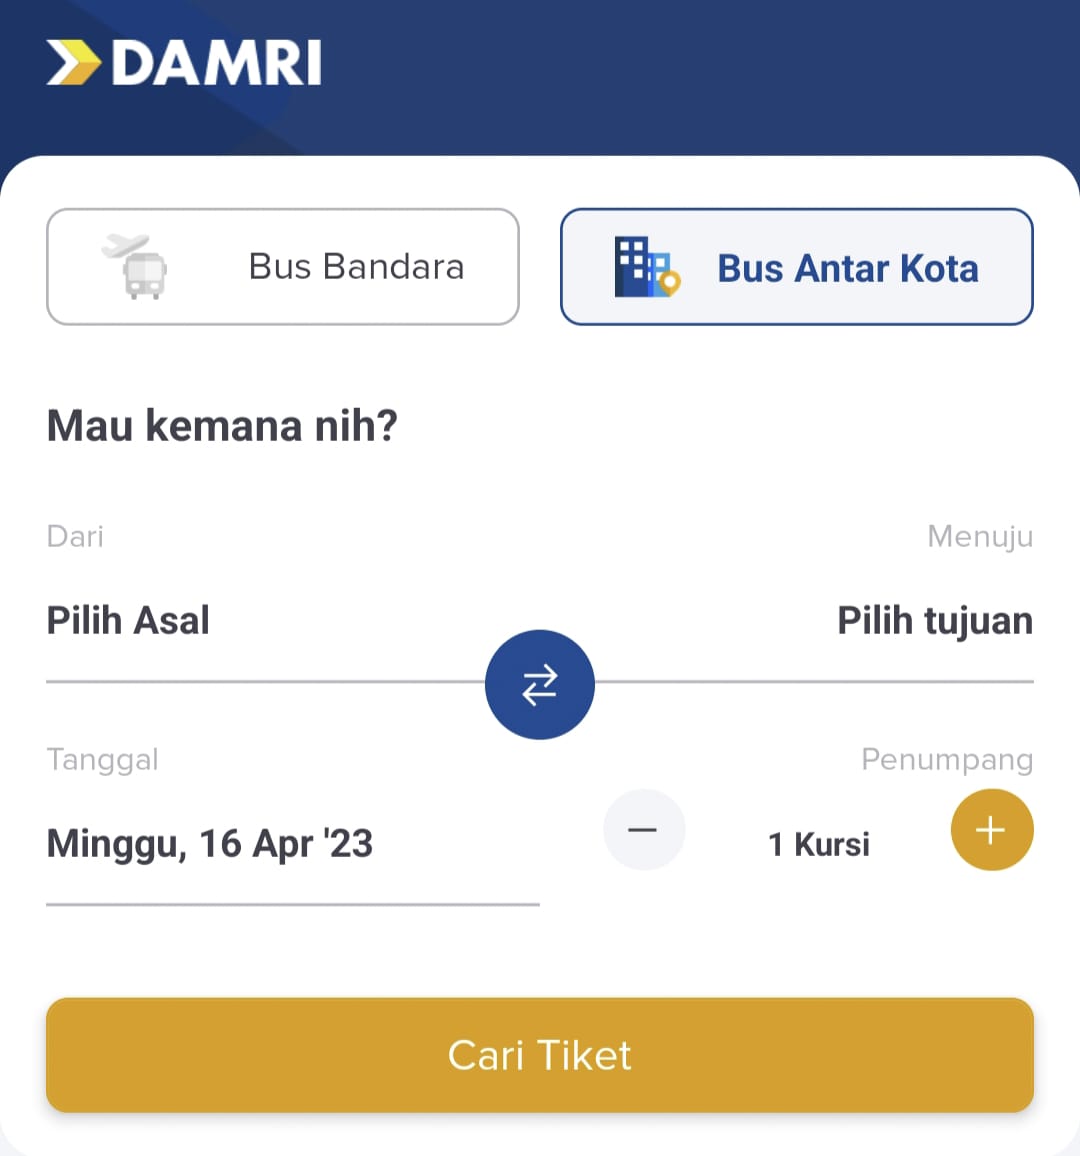 Proses Pemesanan Tiket di Aplikasi DAMRI